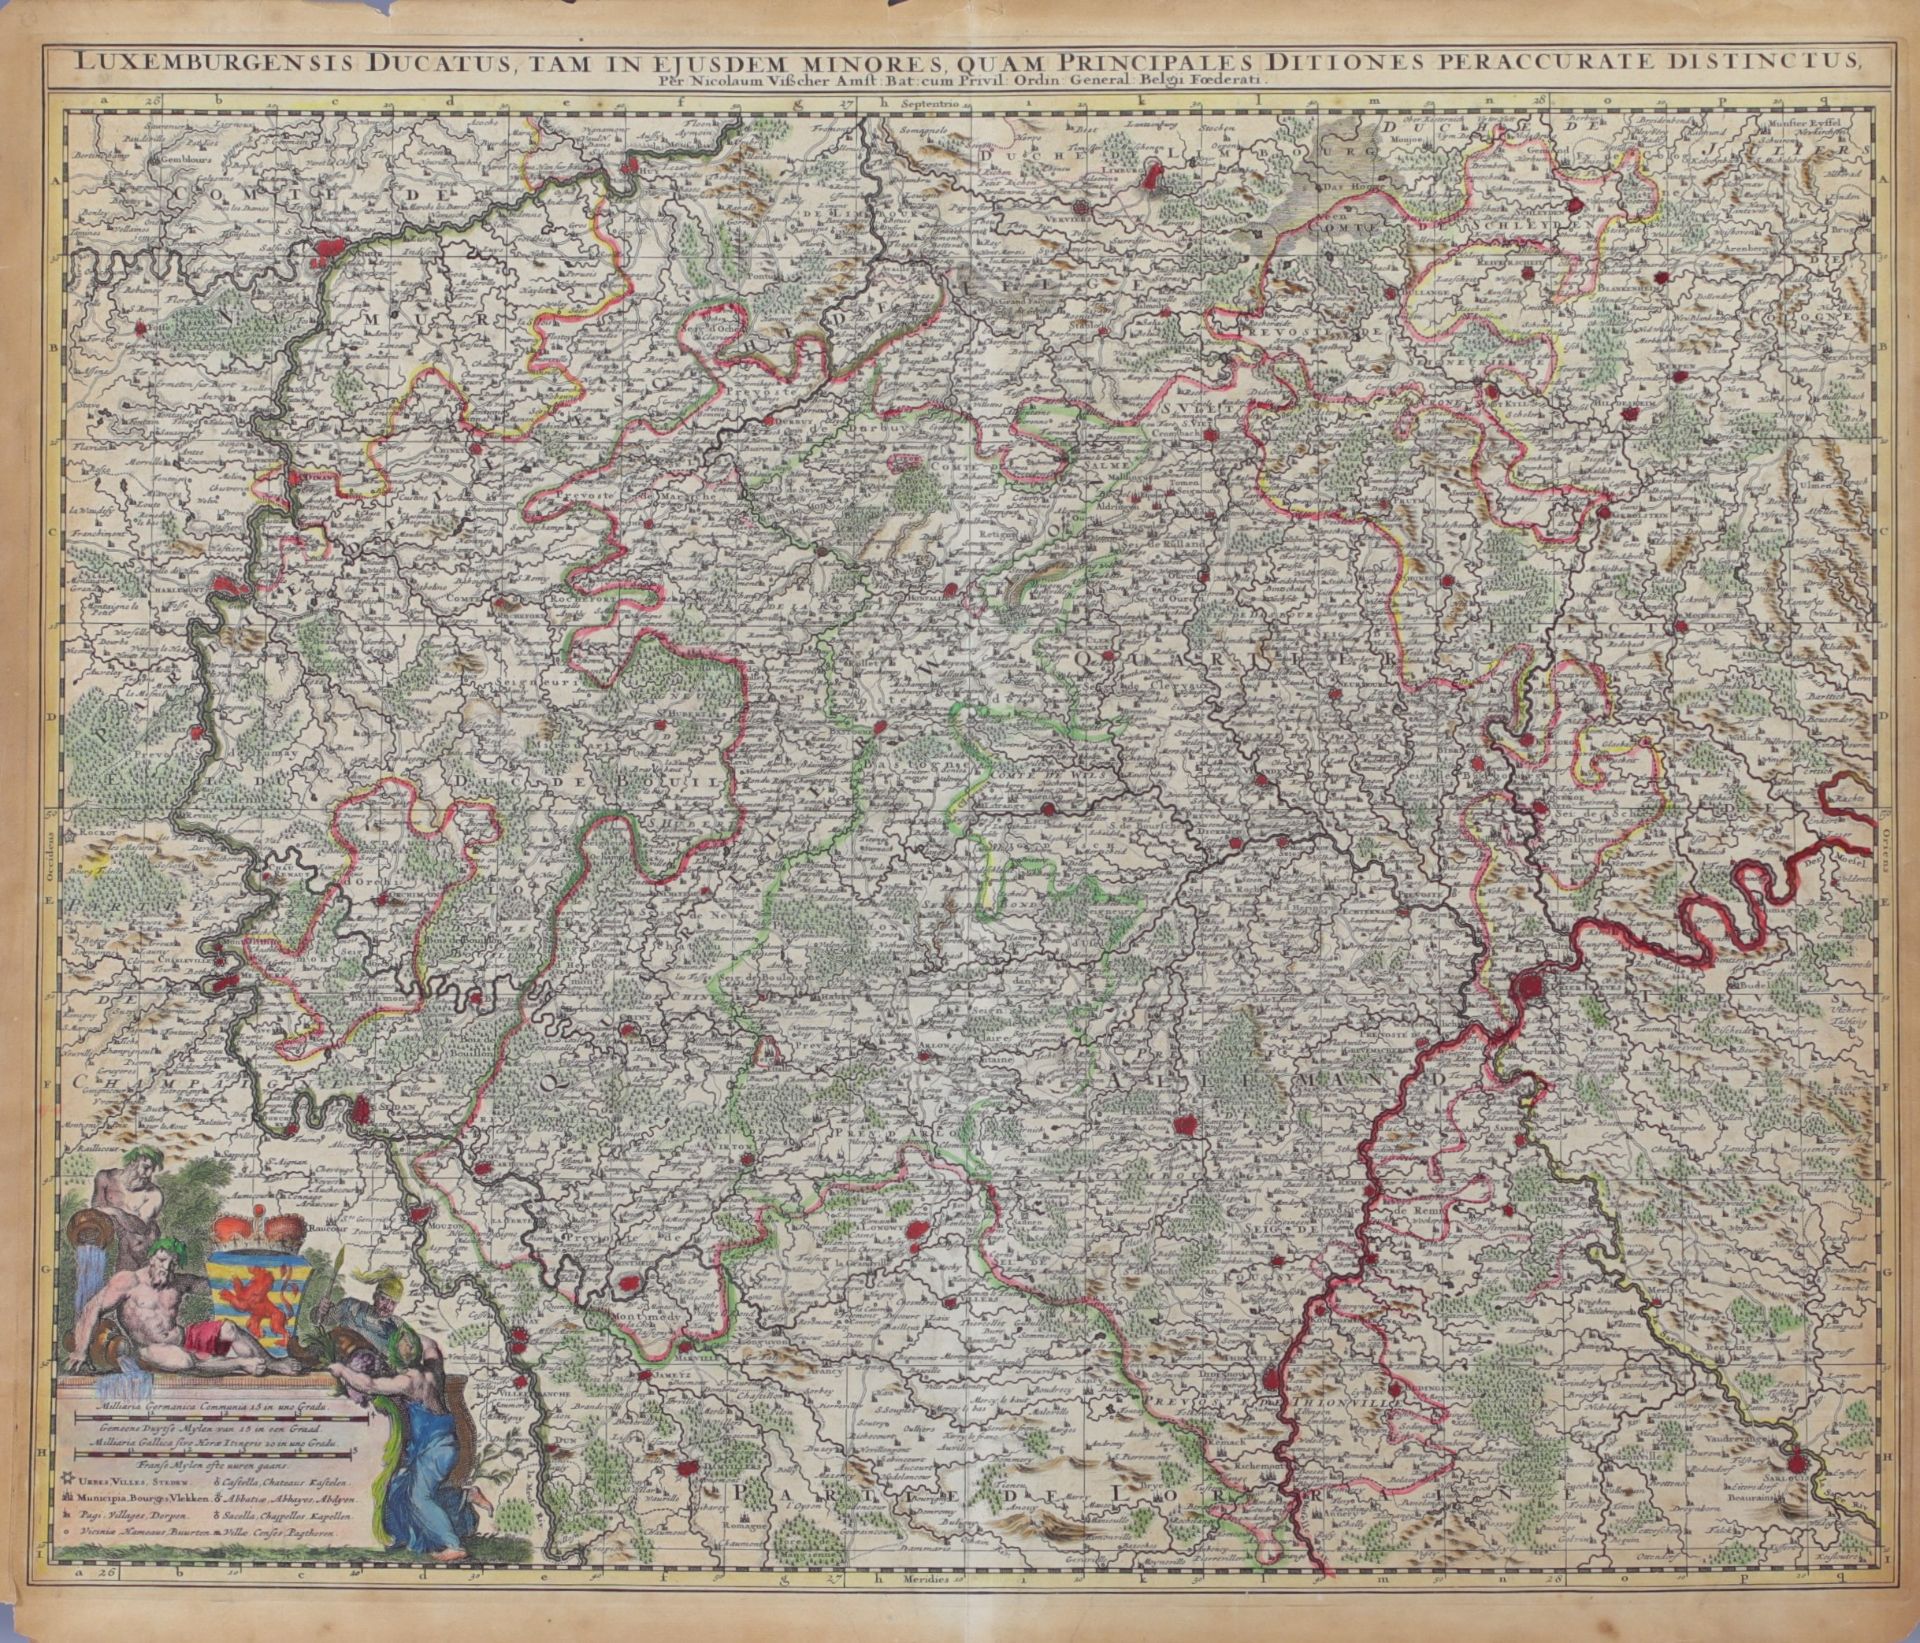 Nicolas VISSCHER (1618-1709) old map "Luxemburgen sis Ducatus" from the 18th century